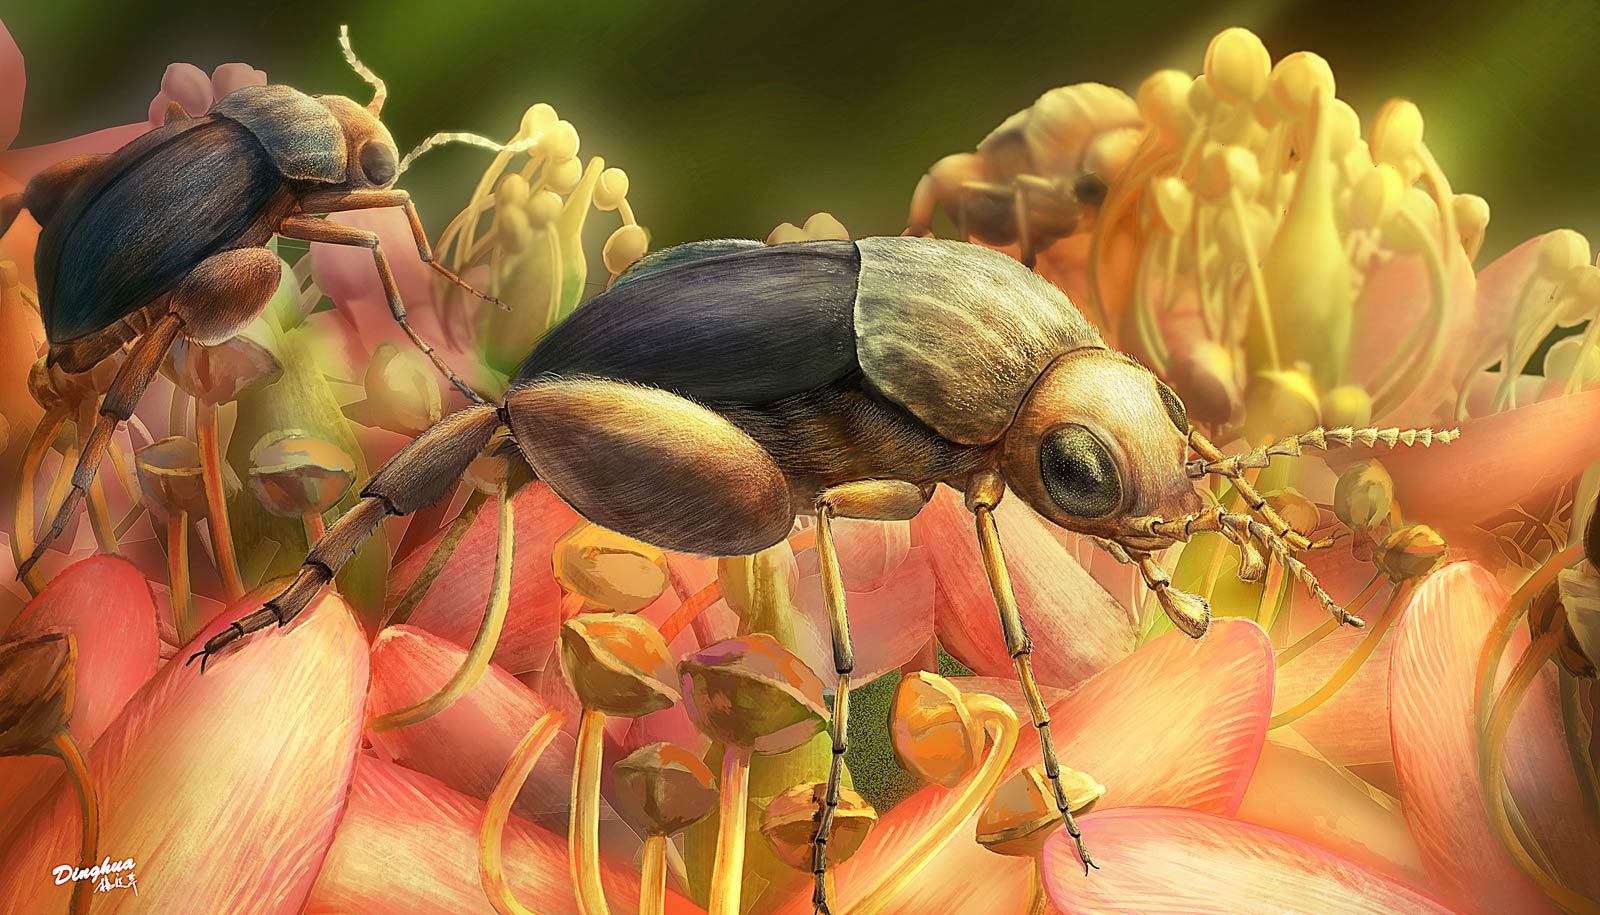 two beetles on flowers